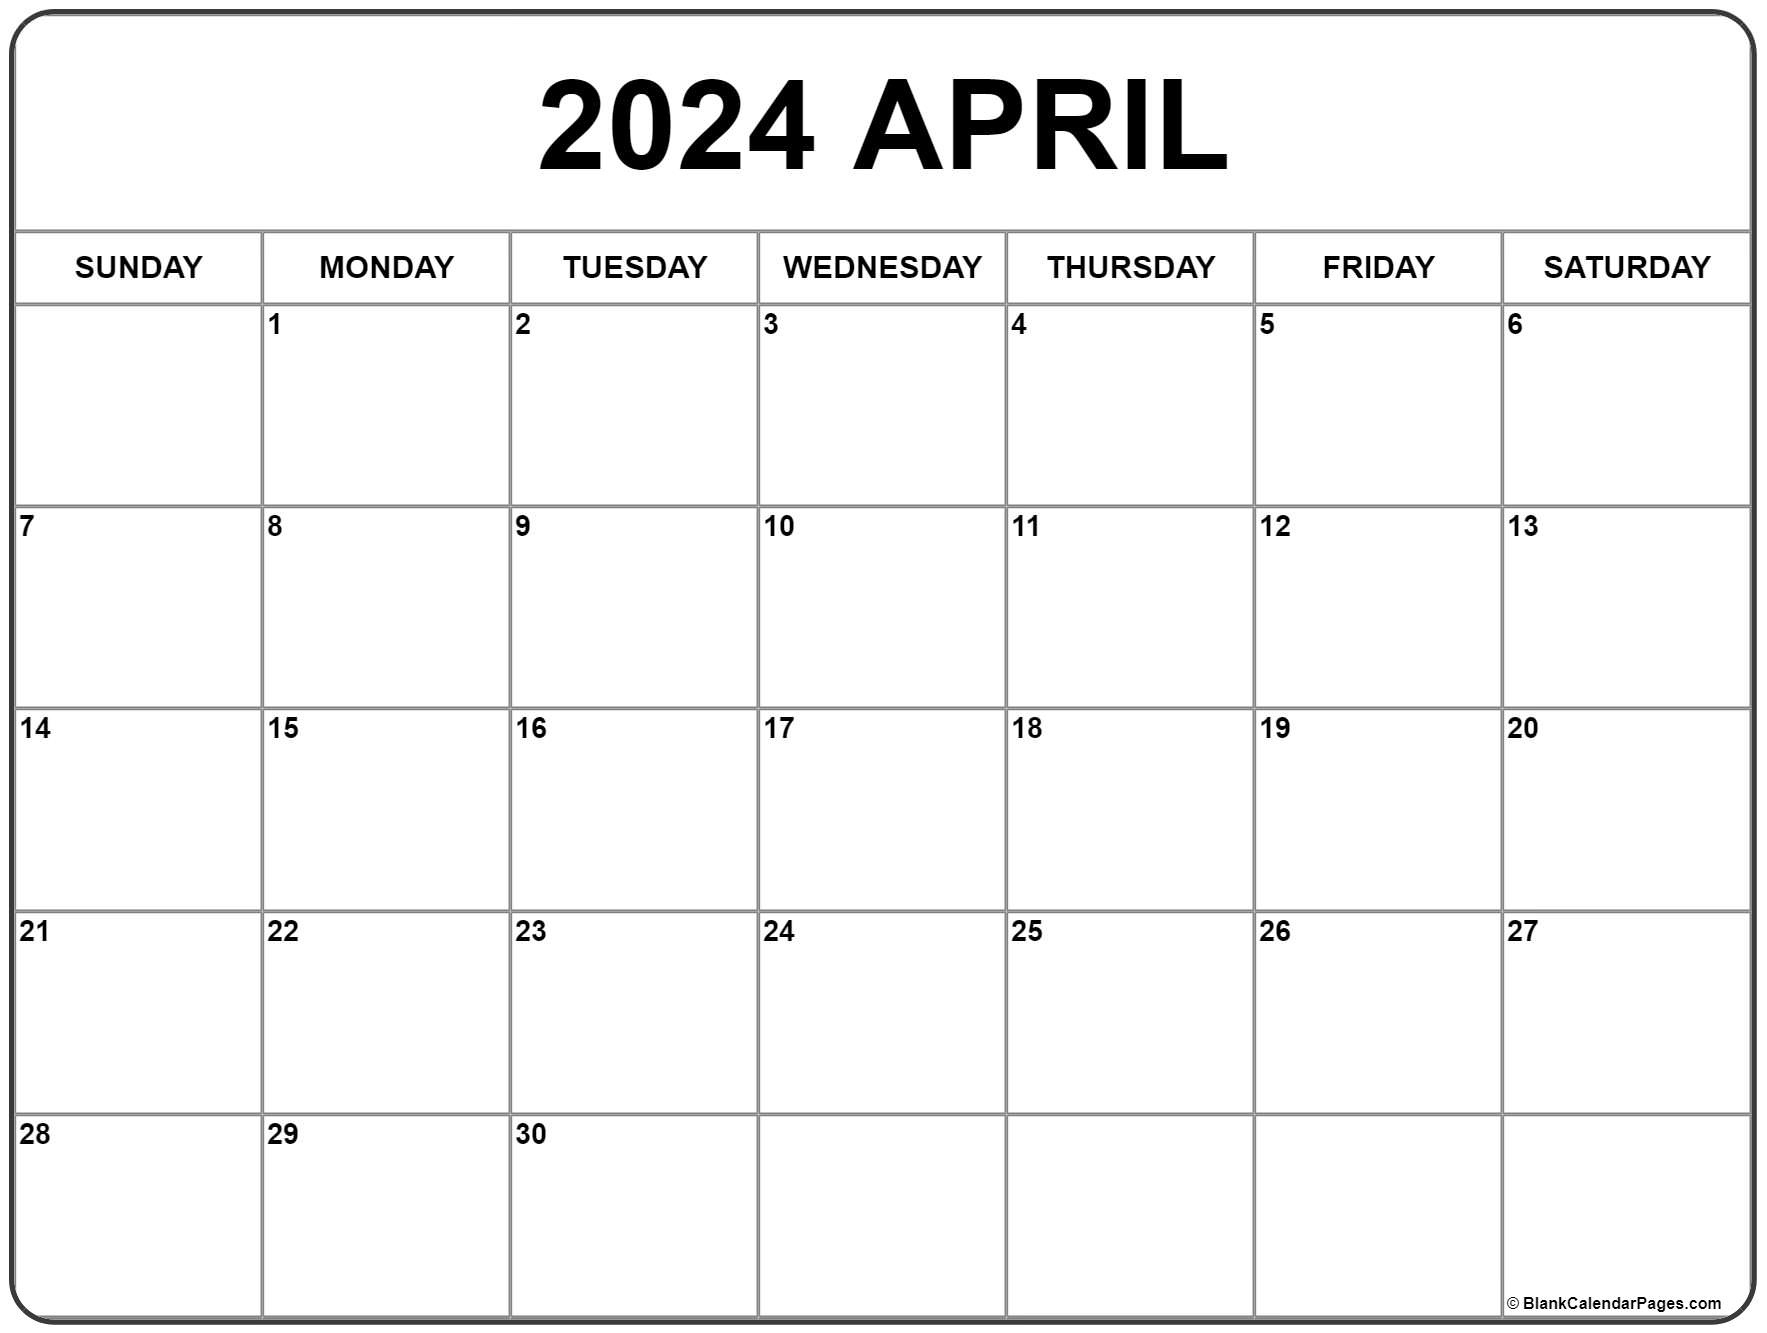 April 2024 Calendar | Free Printable Calendar intended for Free Printable Blank April 2024 Calendar